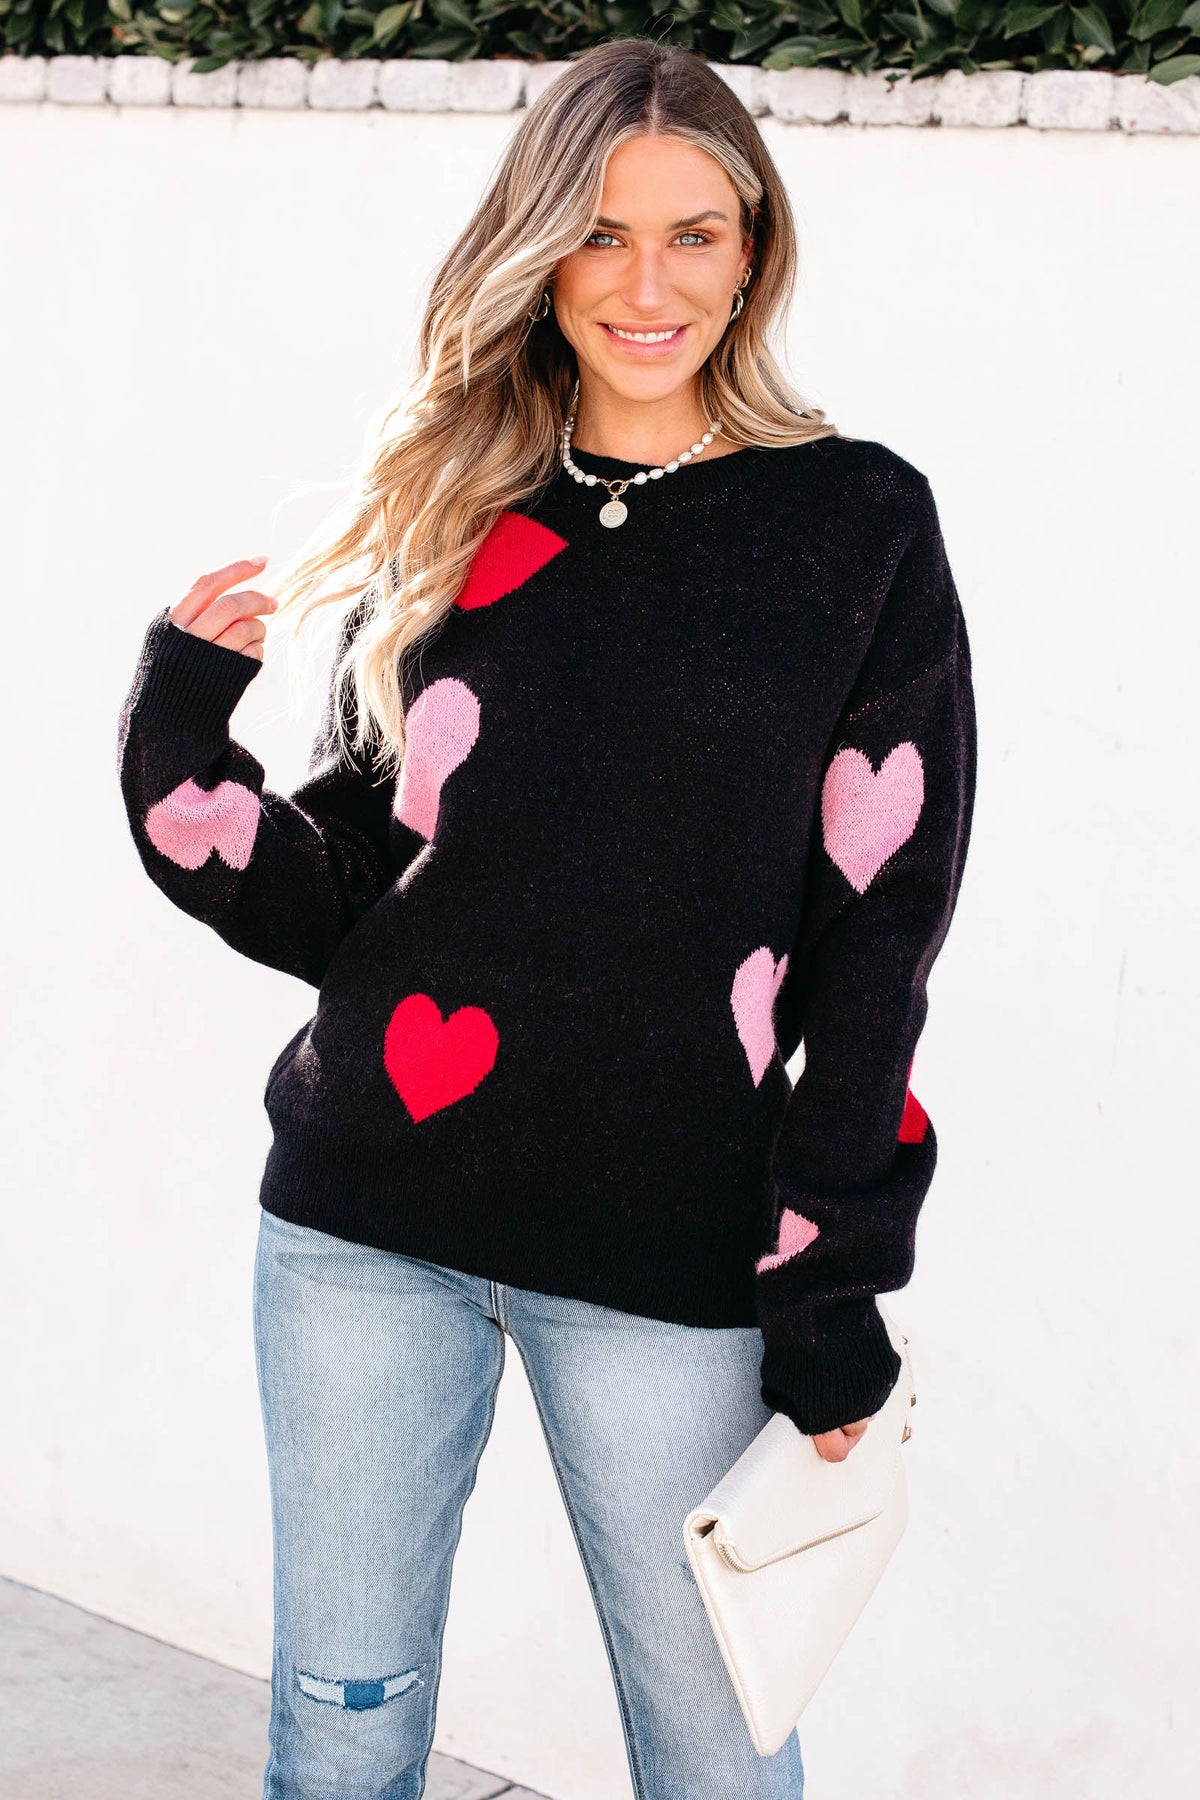 Bringing Back Love Sweater - Black - Closet Candy Boutique